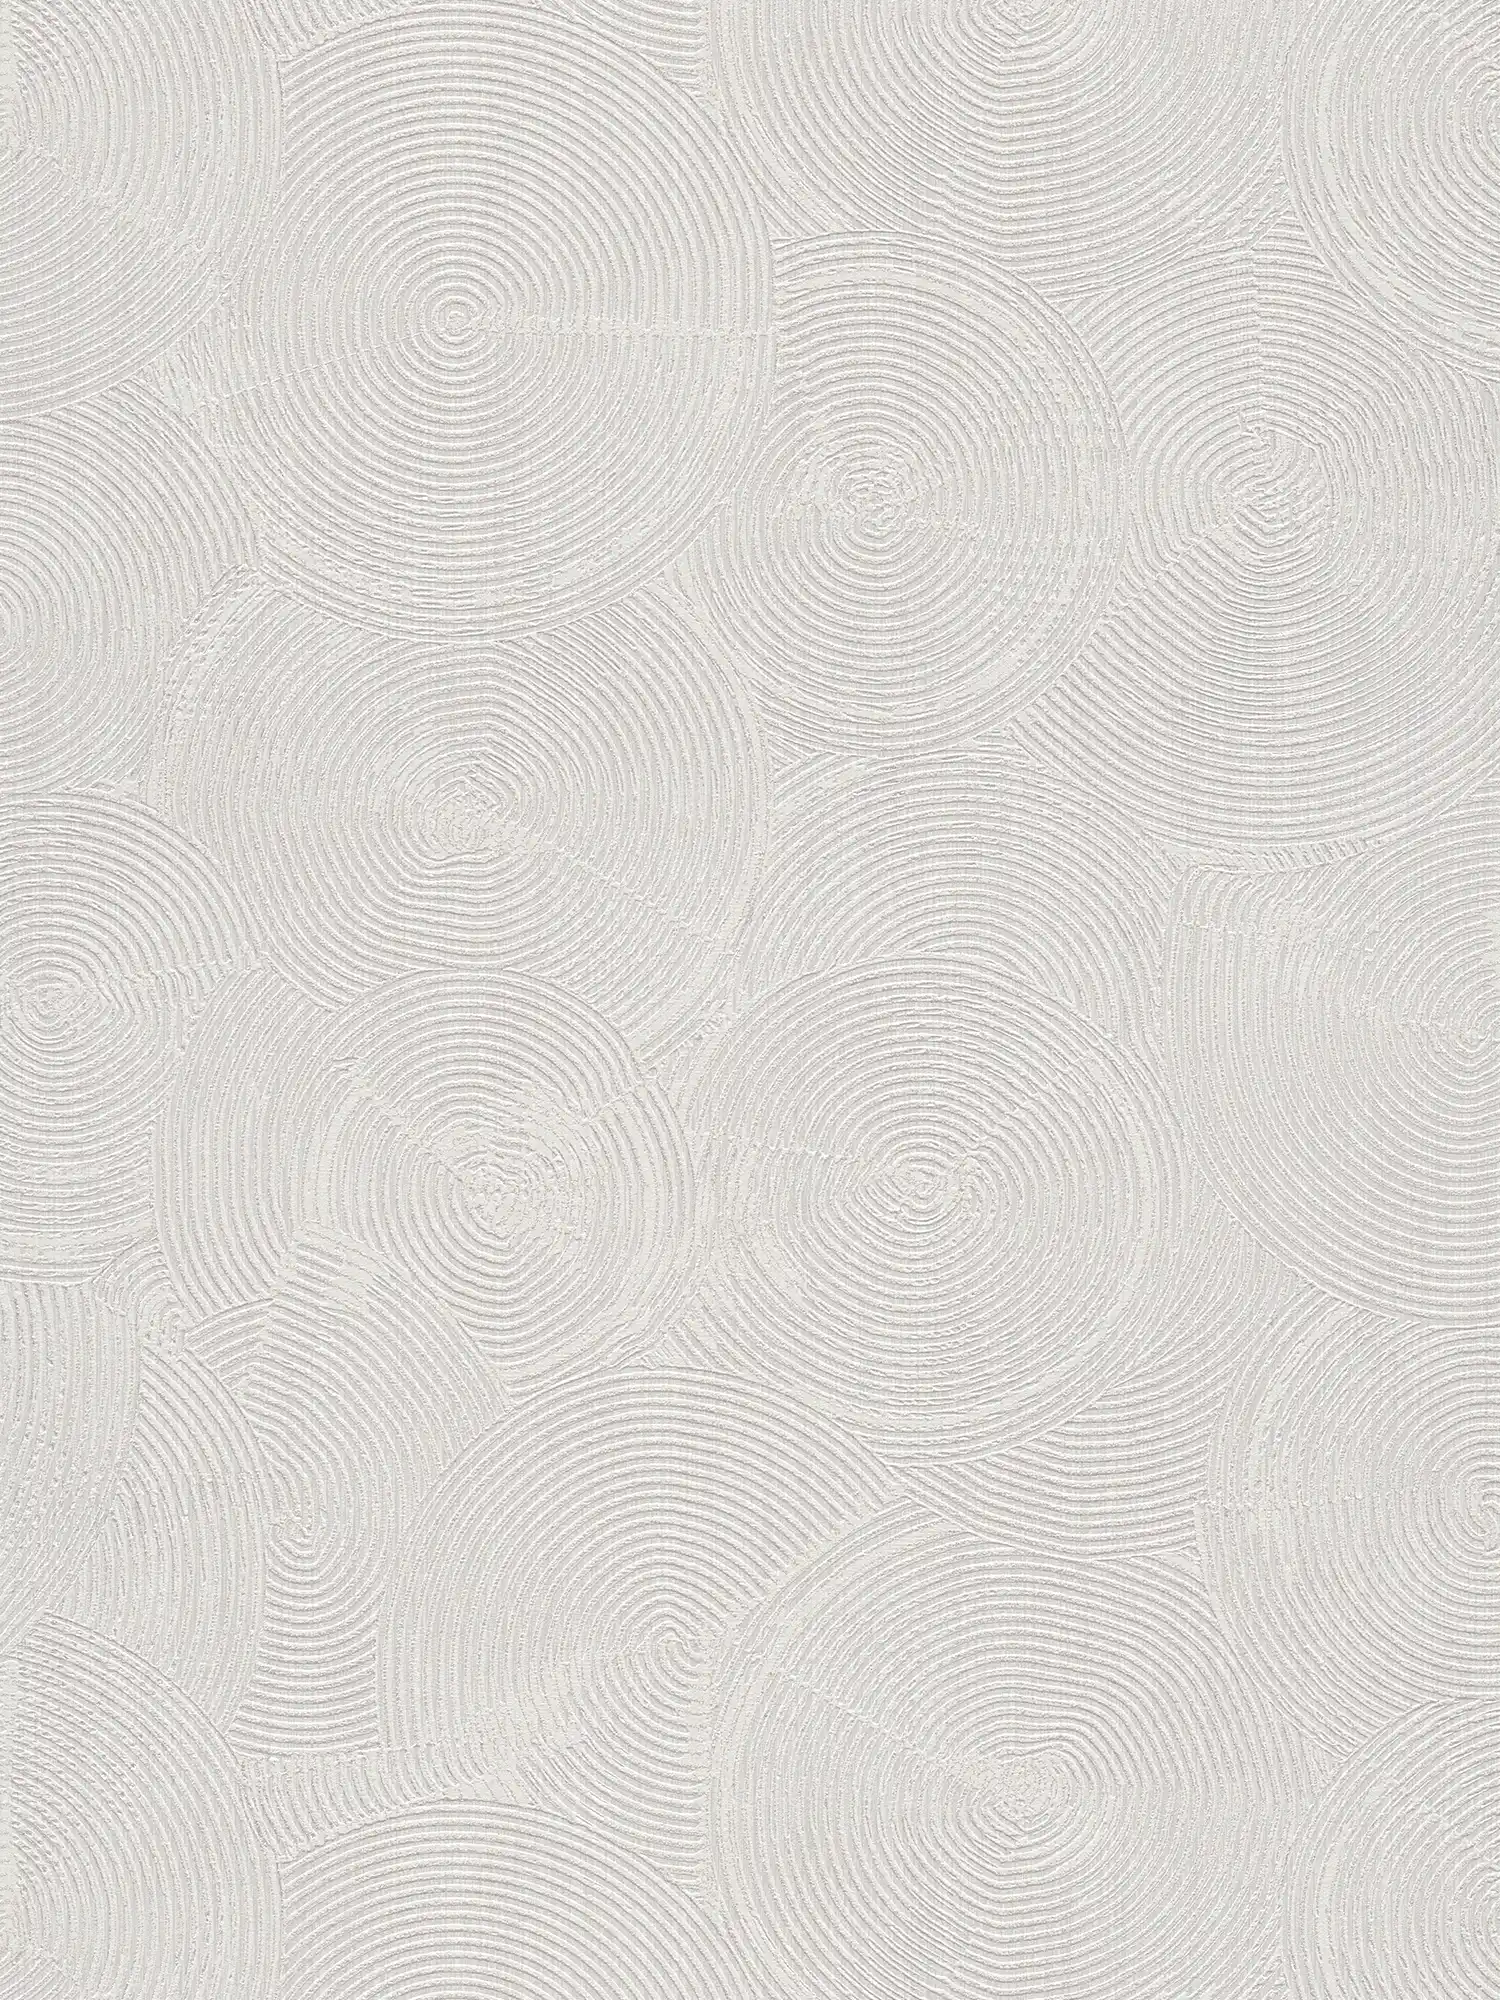 Wallpaper with modern plaster look & metallic accents - grey, metallic, white
